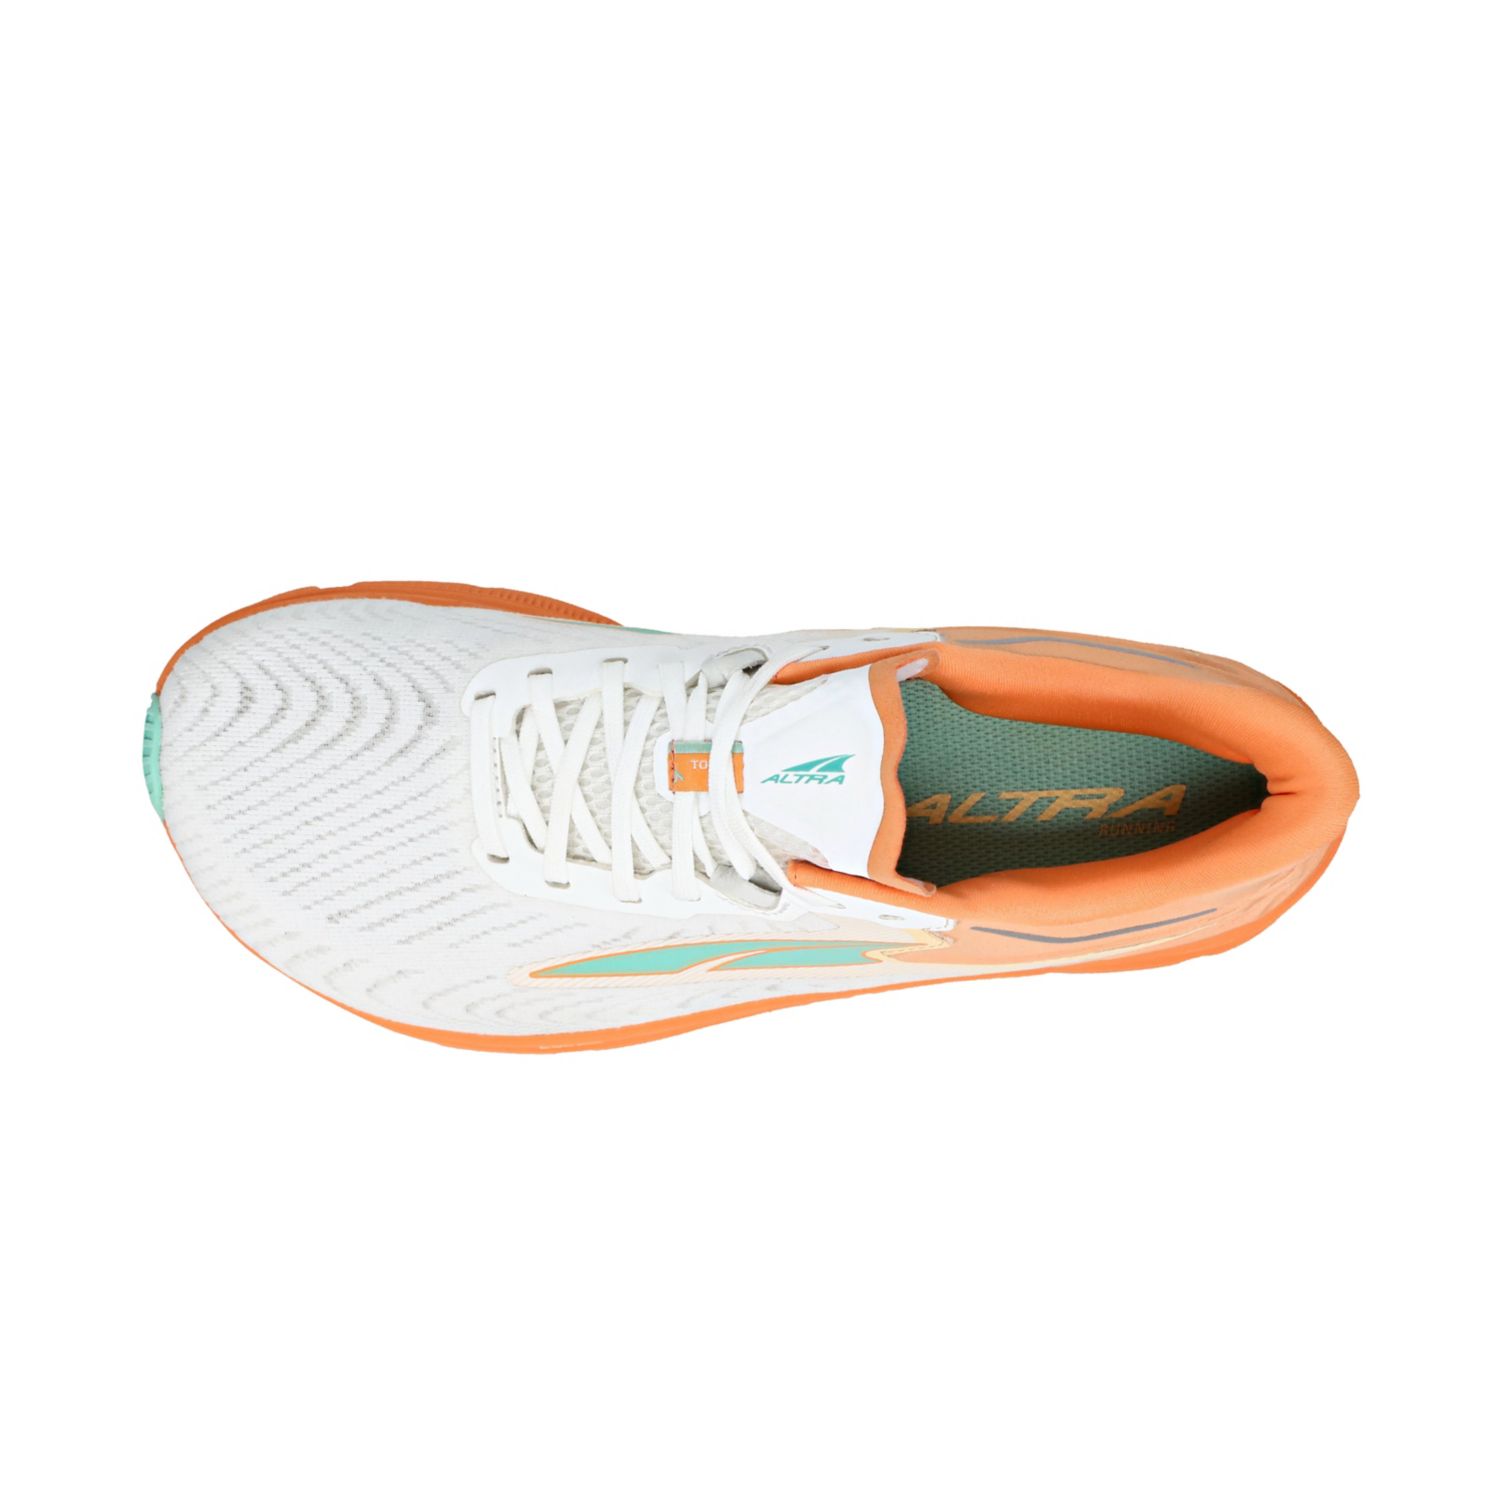 White / Orange Altra Torin 6 Women's Walking Shoes | Ireland-67204959